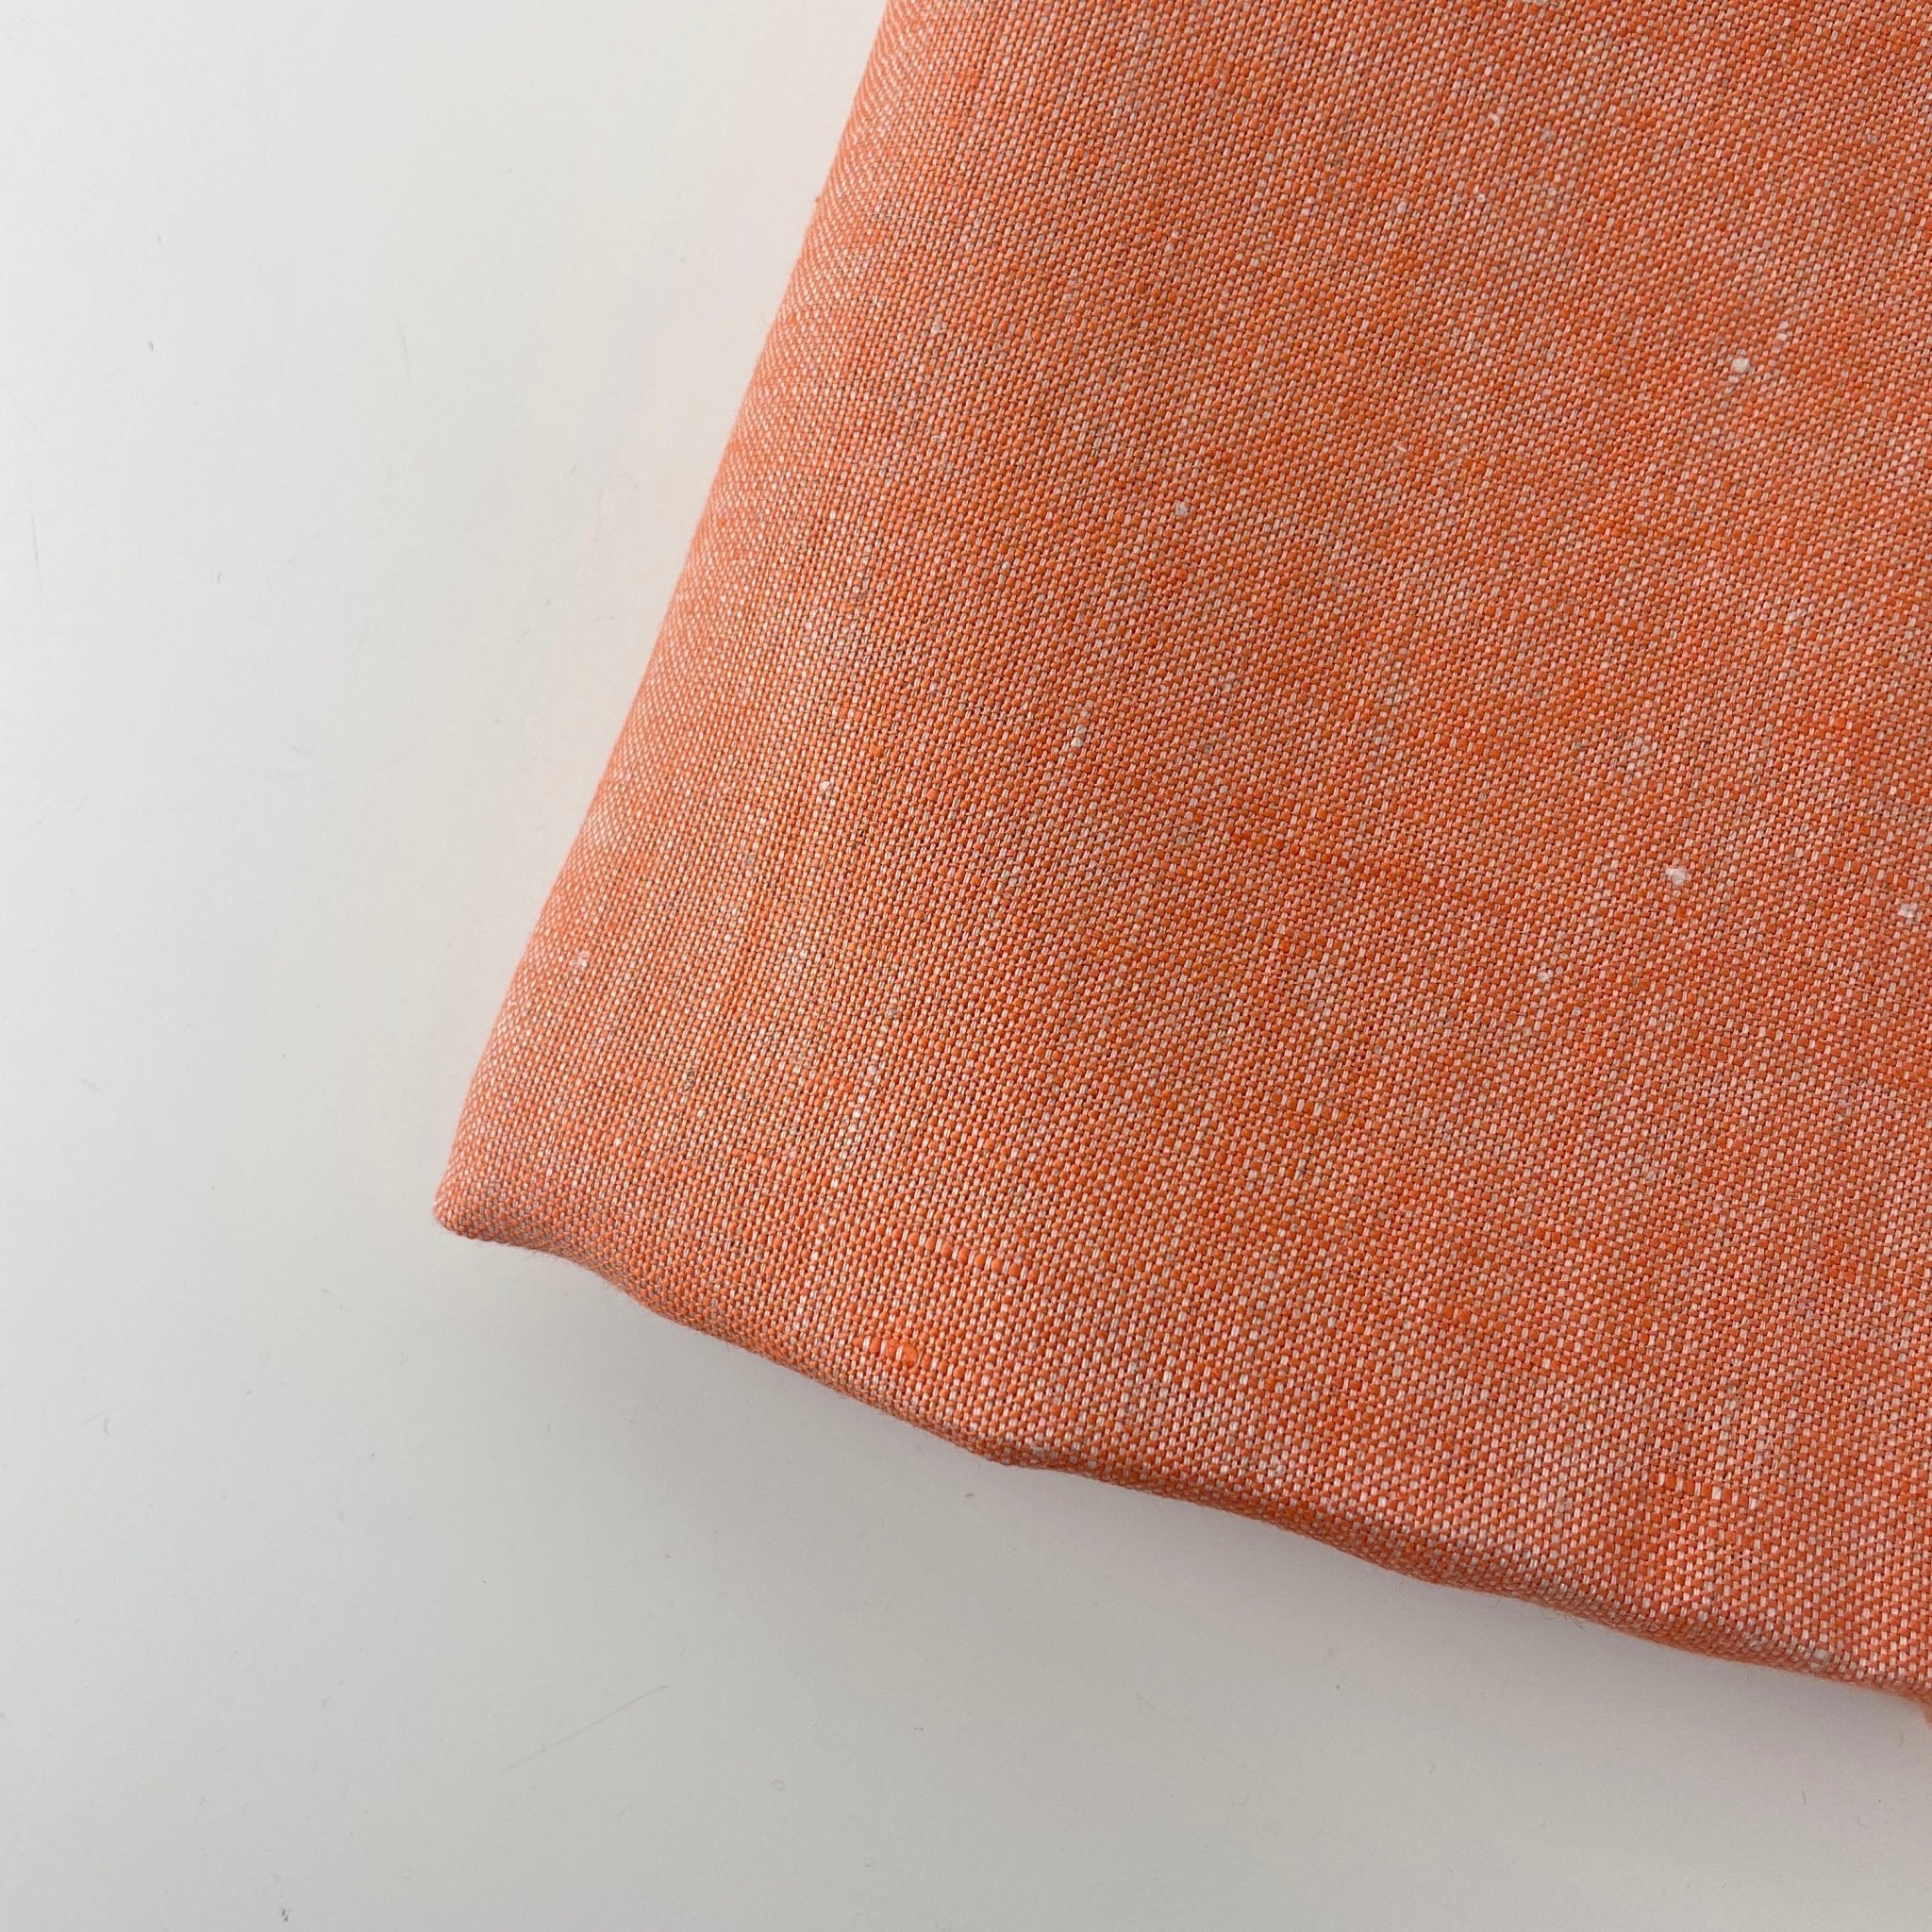 Linen Orange Dot Fabric 3509 - The Linen Lab - Orange